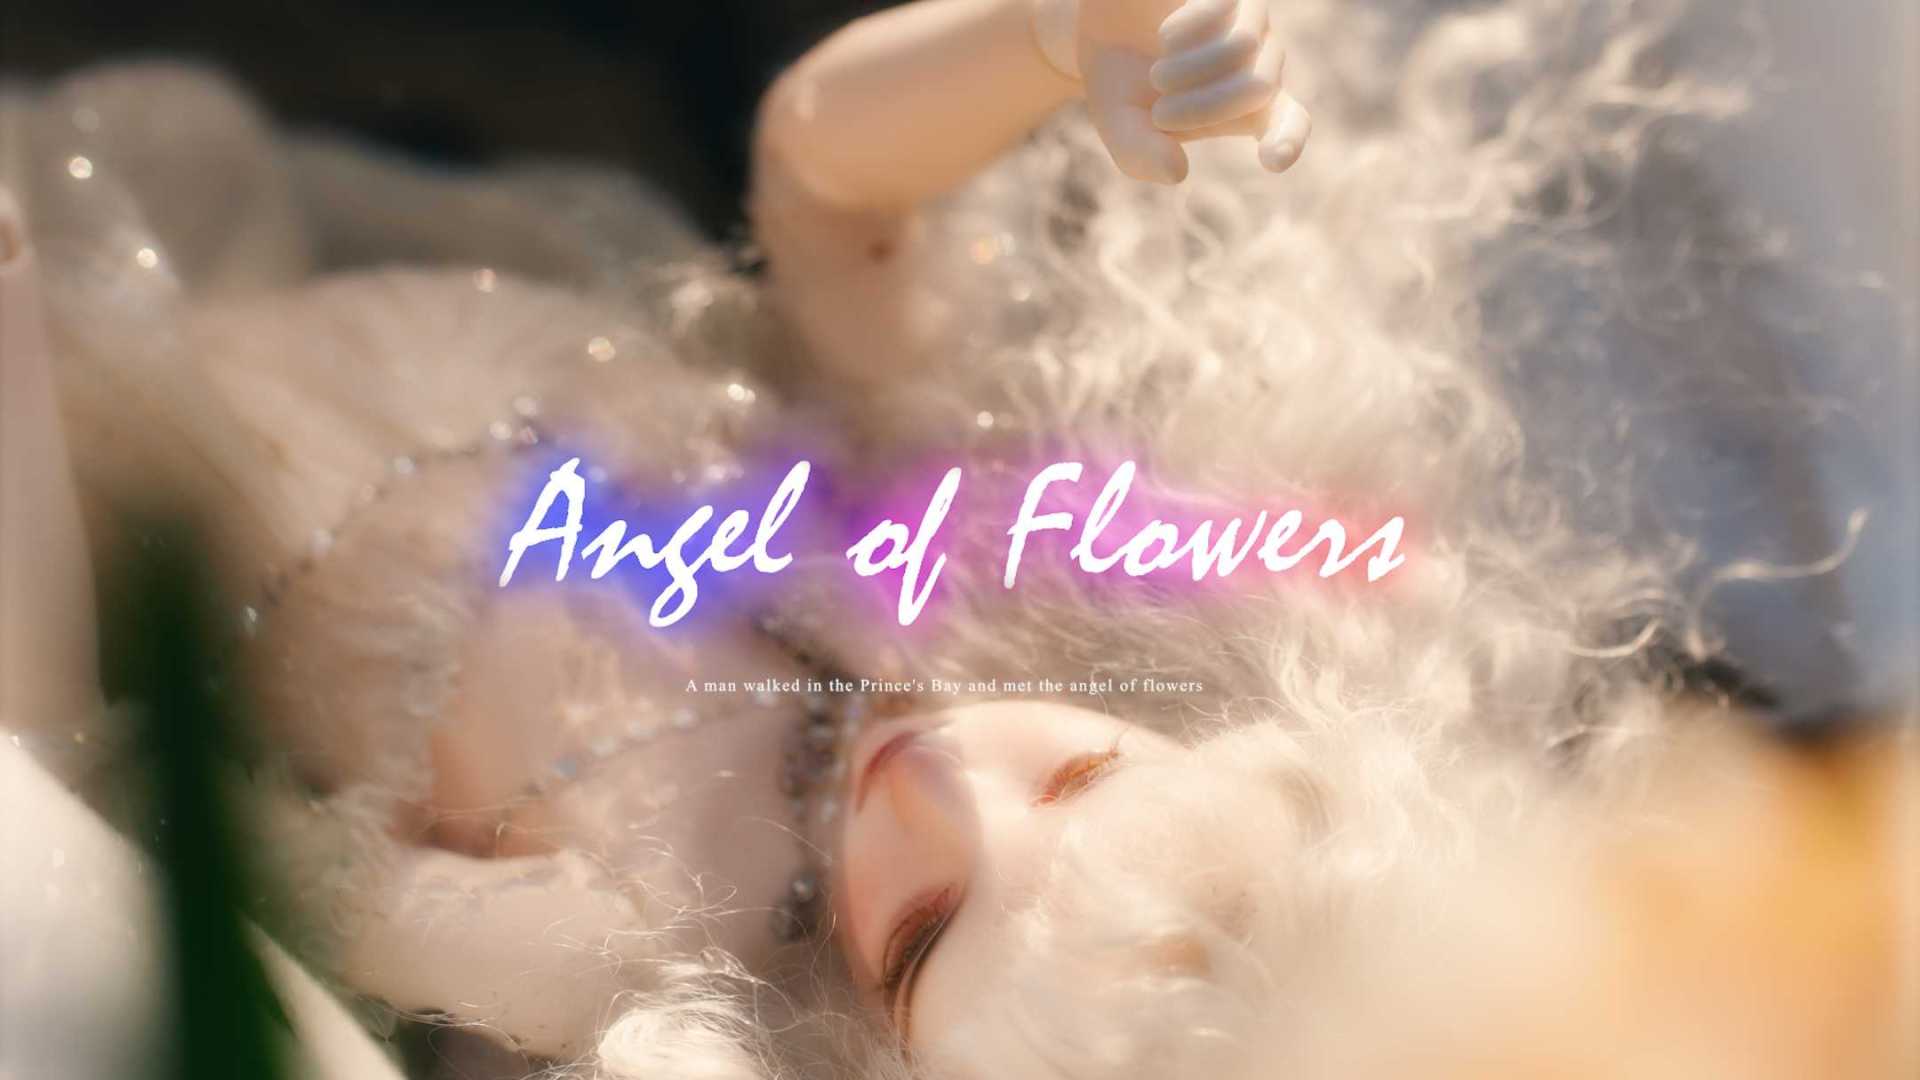 春季法式浪漫短片MV《Angel Of Flowers》